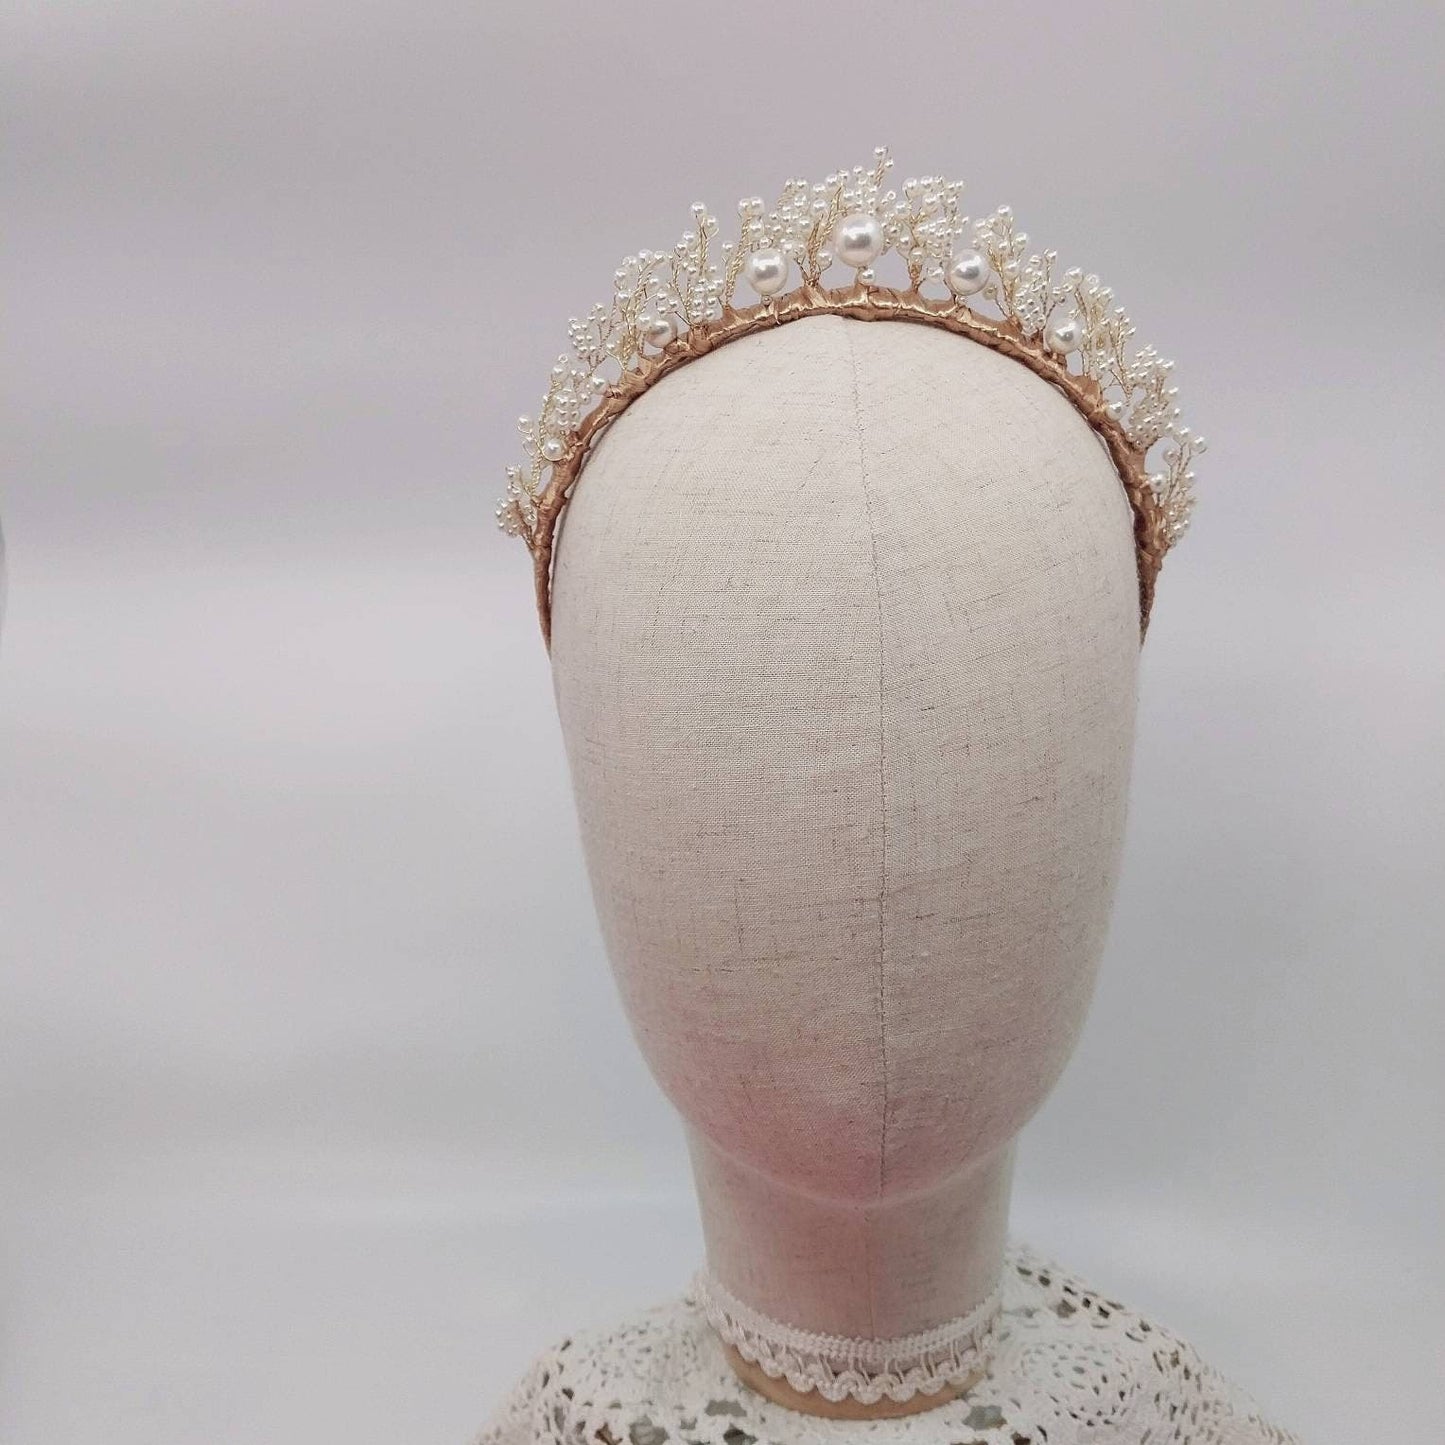 FLUER Cream white Pearl Headband Bridal Wedding headpiece hairband handmade handcrafted hair accessories Australia pearls bride weddings